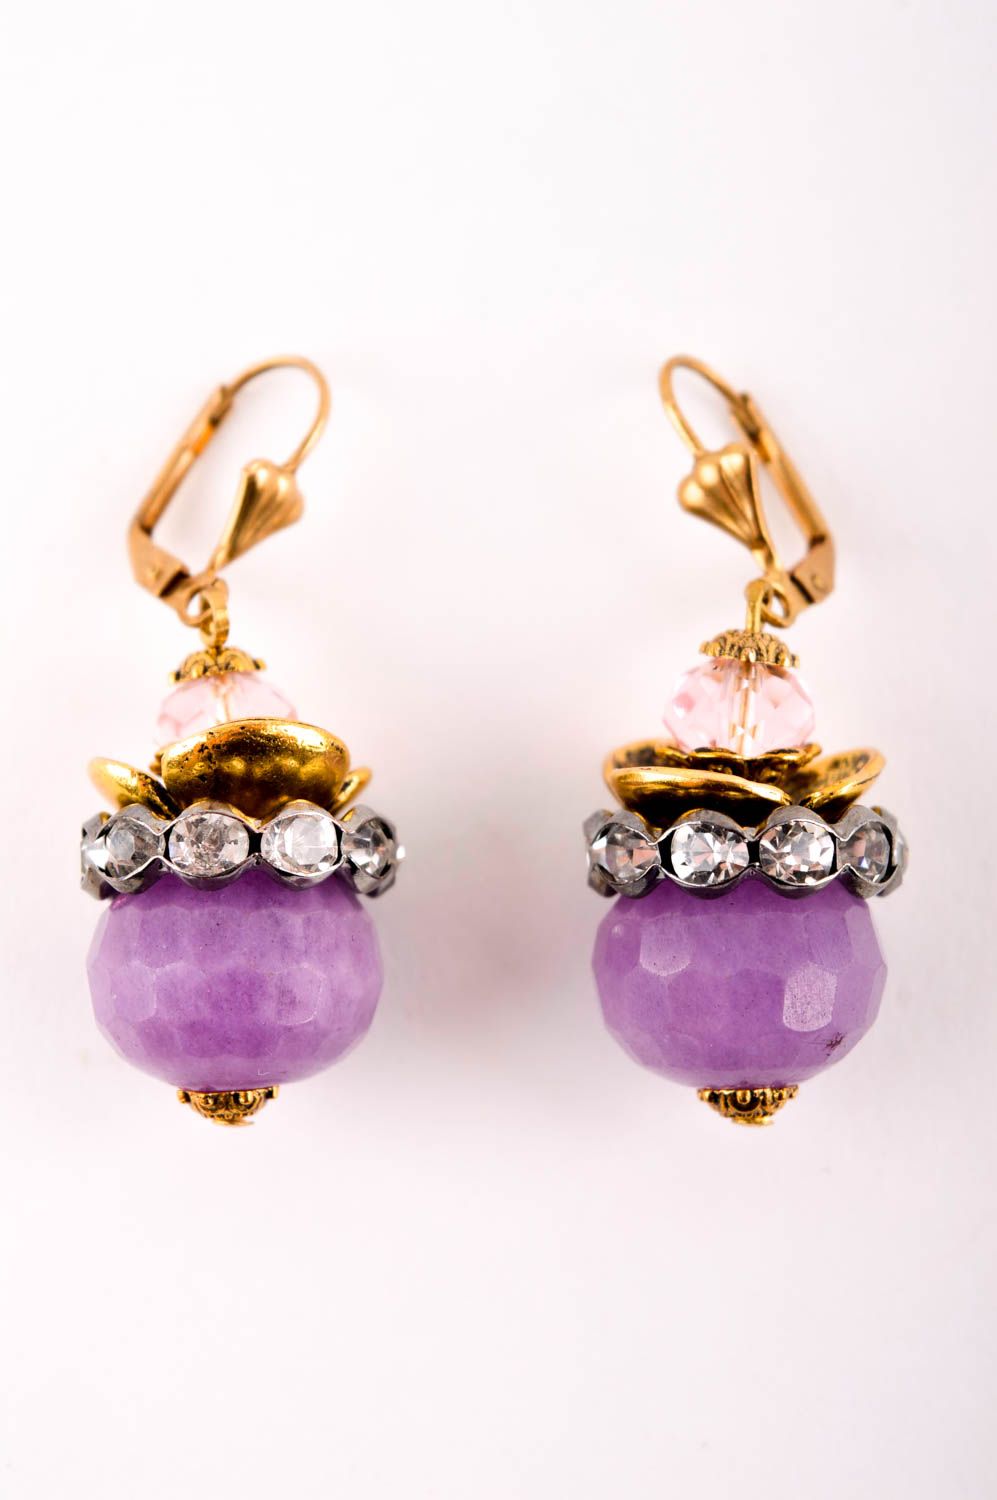 Handmade earrings designer earrings stone earrings with charms unusual jewelry photo 3